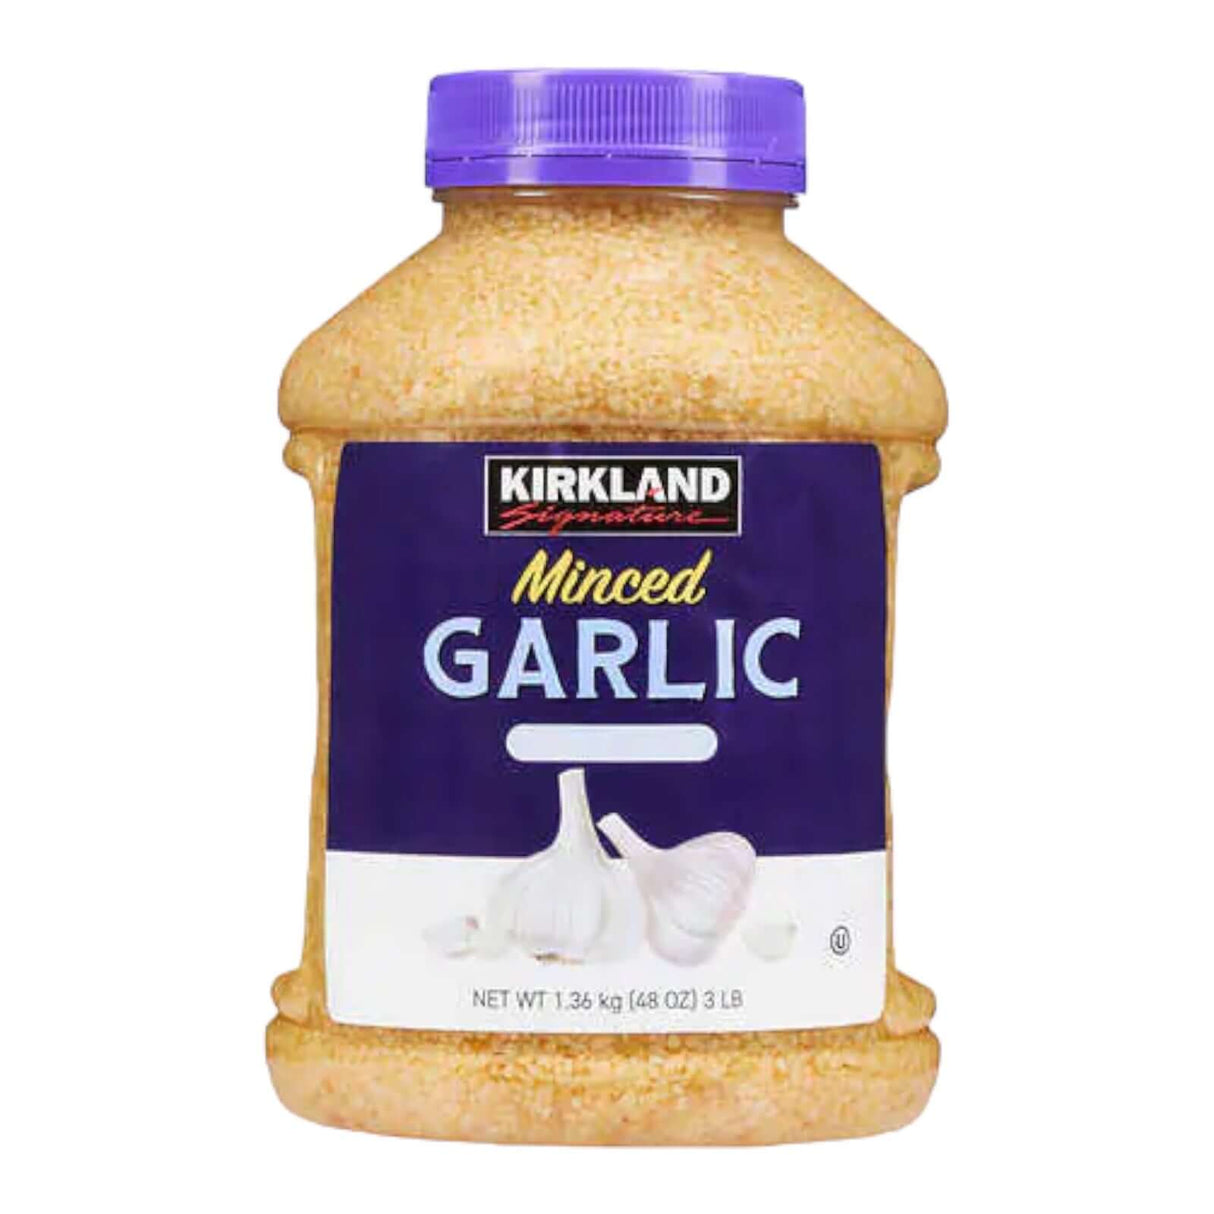 KIRKLAND Minced Garlic